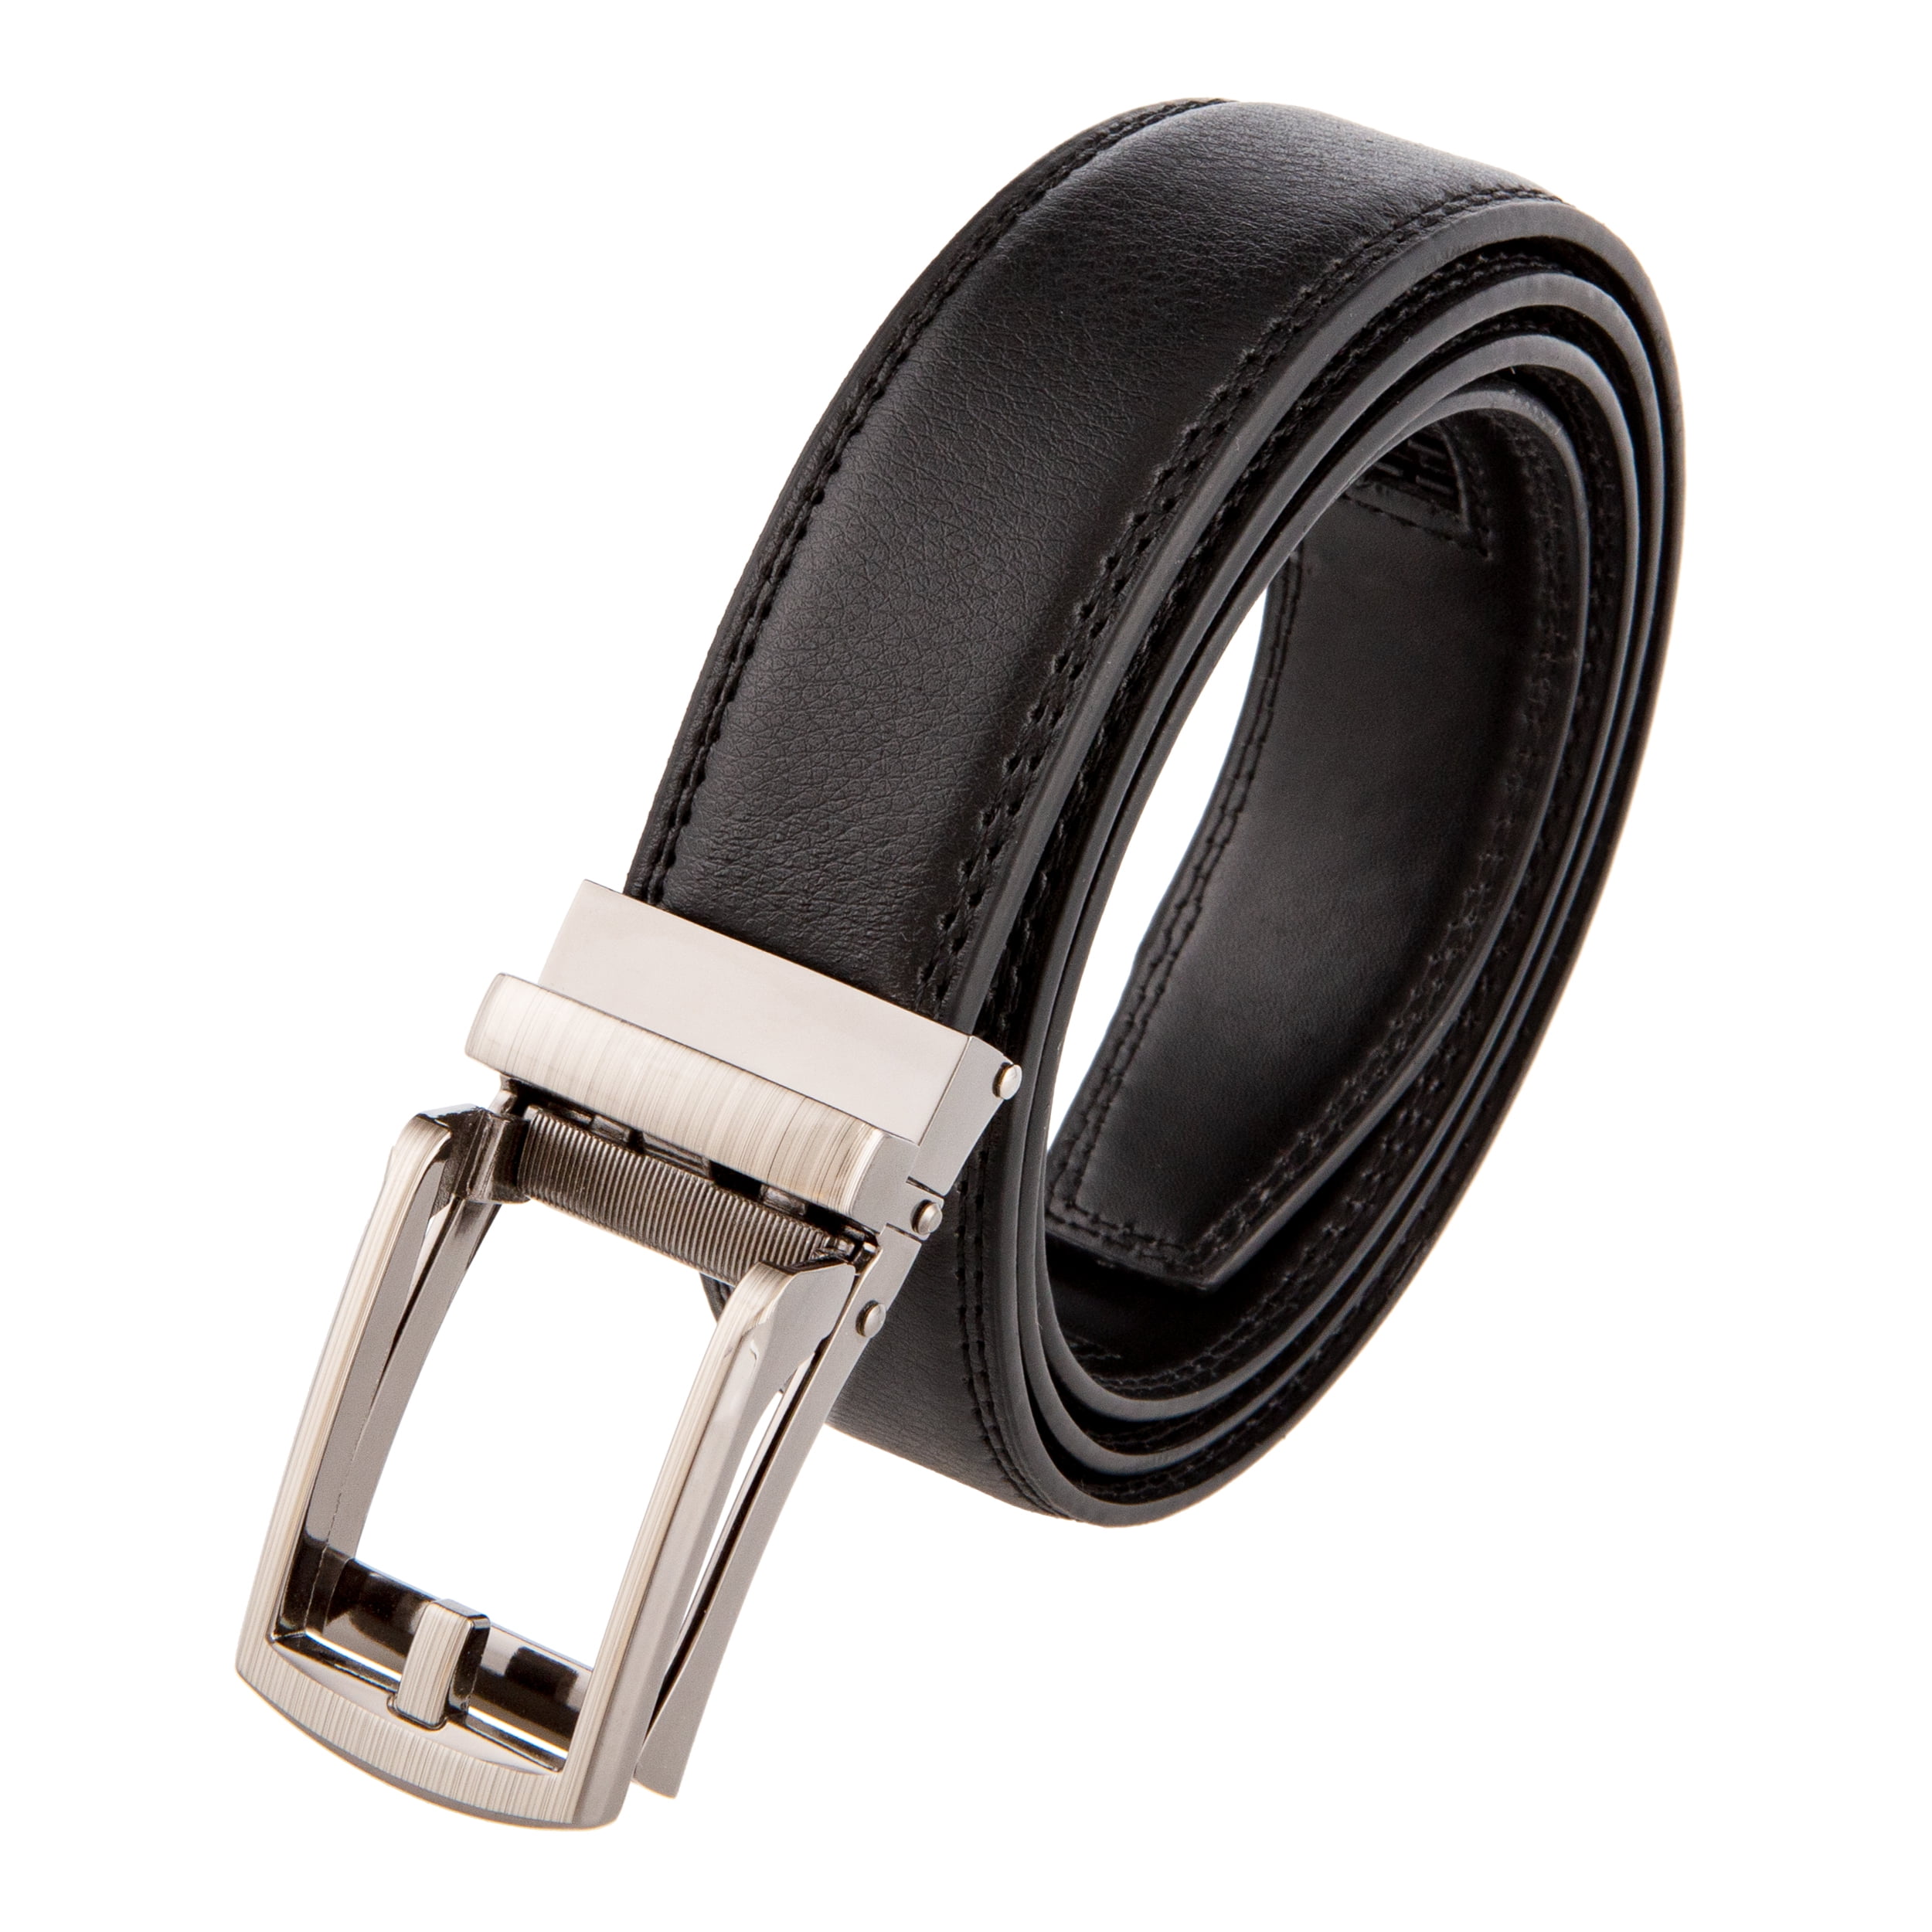 Fashion Comfort Click Belt PU Leather Brown And Black For Gentleman Men Q 